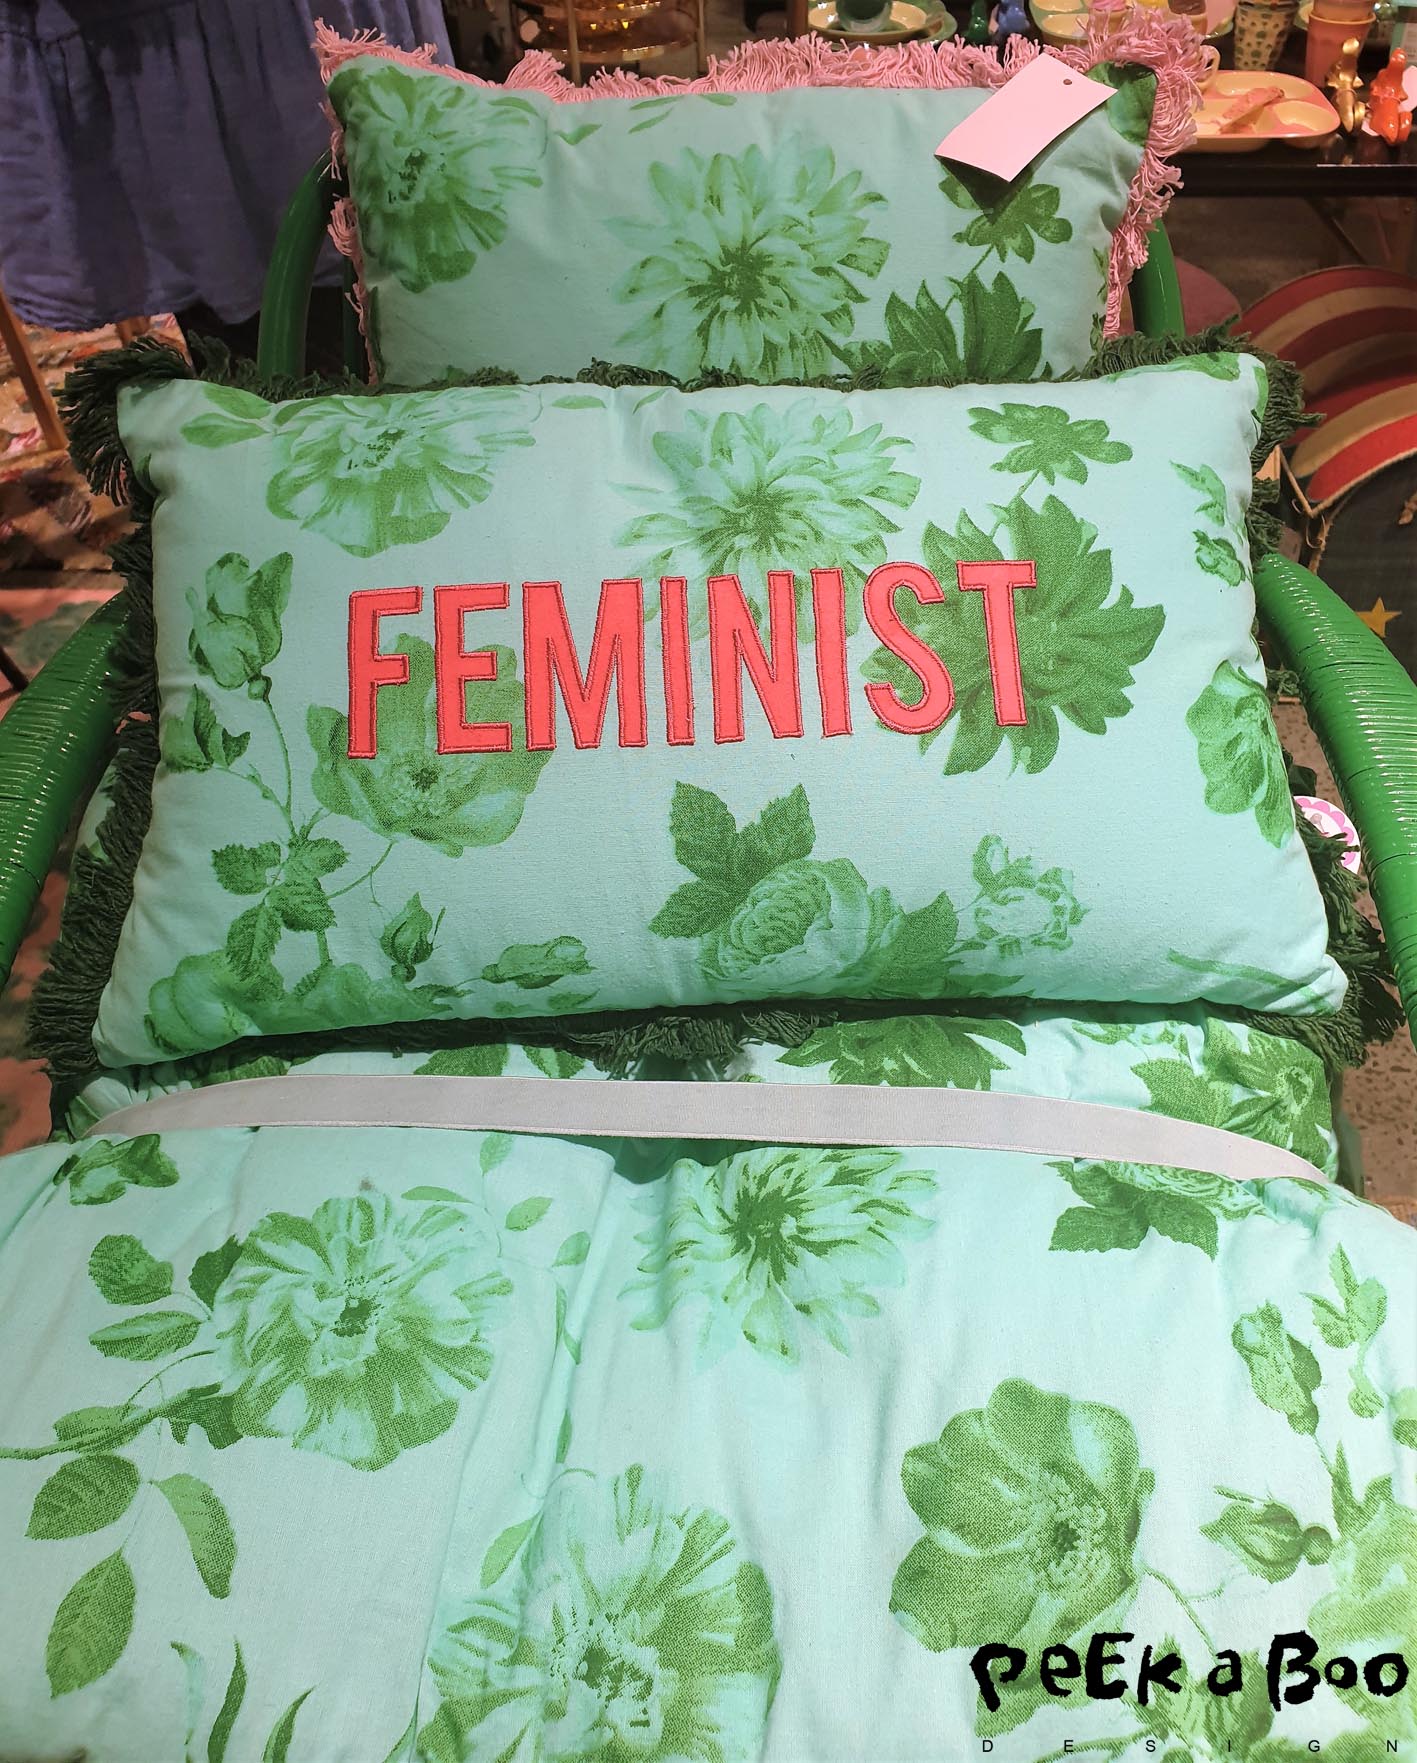 The feminist pillow from danish Rice.